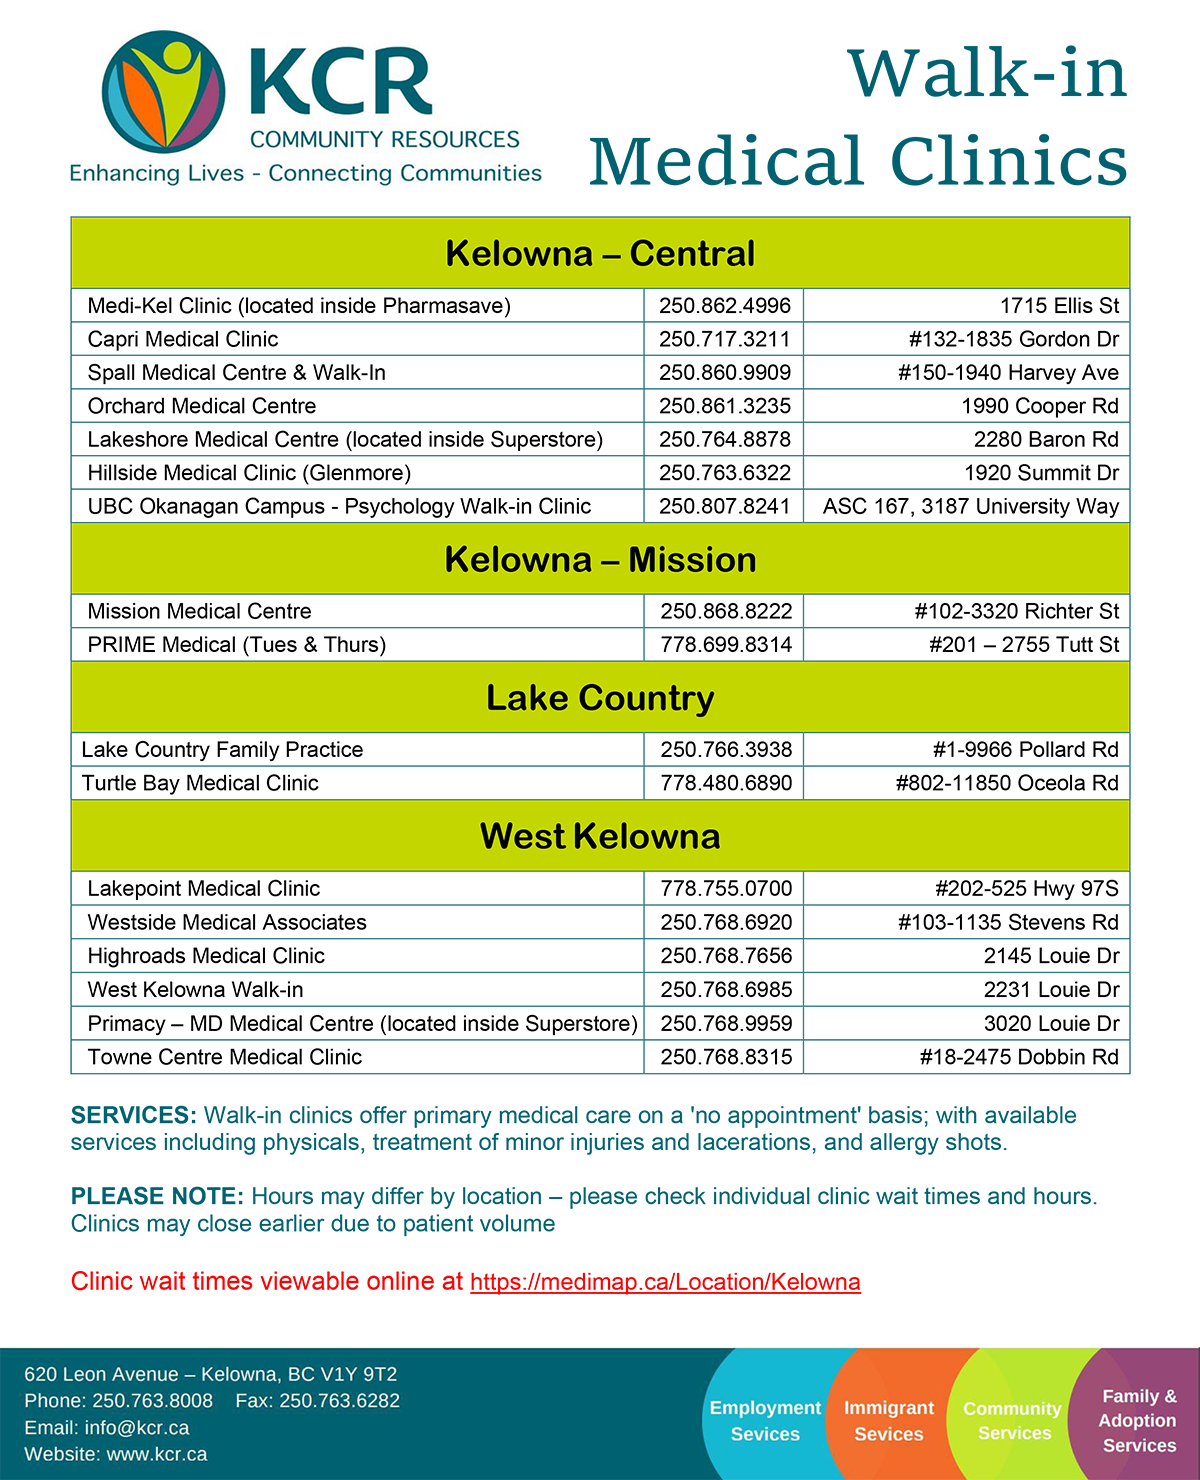 KCR Community Resources - Publications - Walk-in Medical Clinics